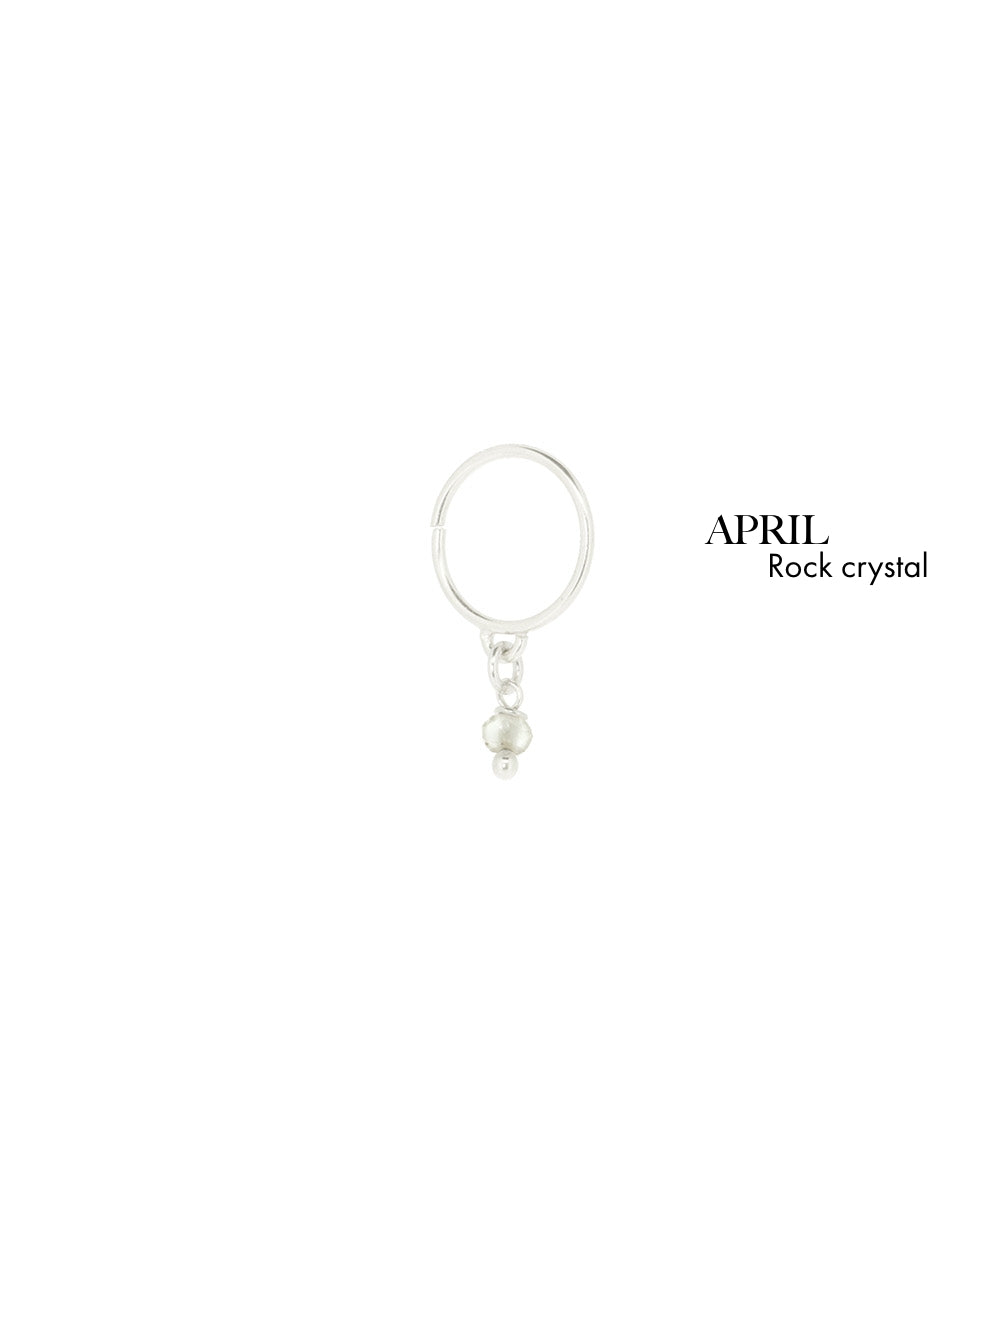 Bestie Birthstone April - Rock Crystal | 925 Sterling Silver